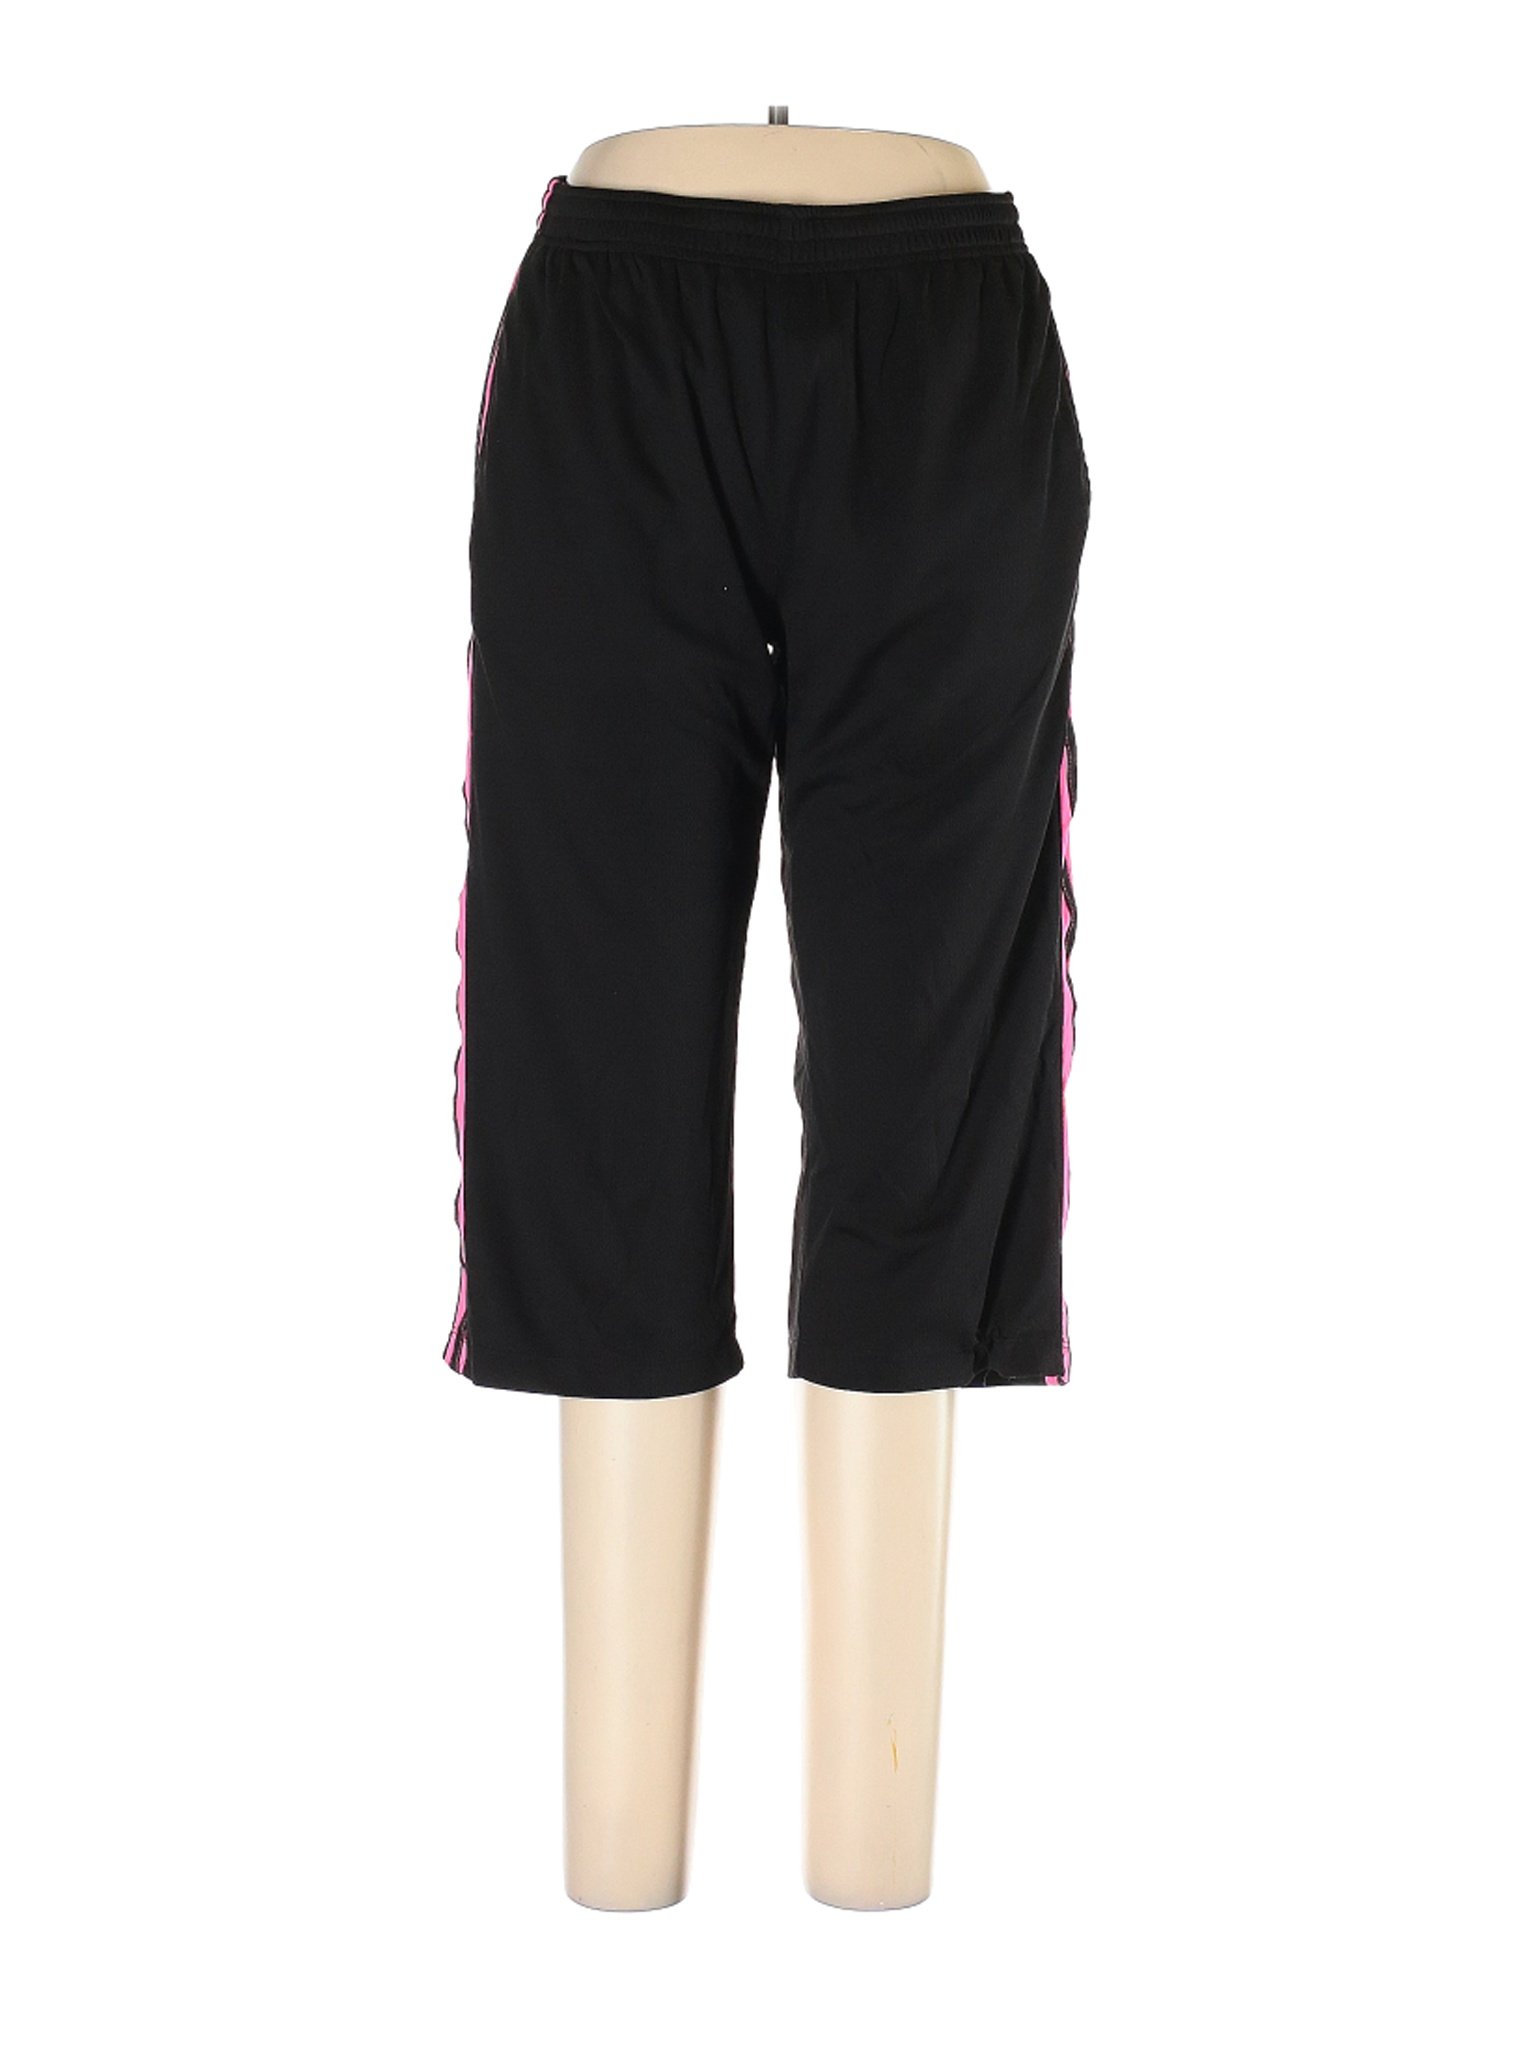 Sport Essentials Women Black Active Pants L | eBay